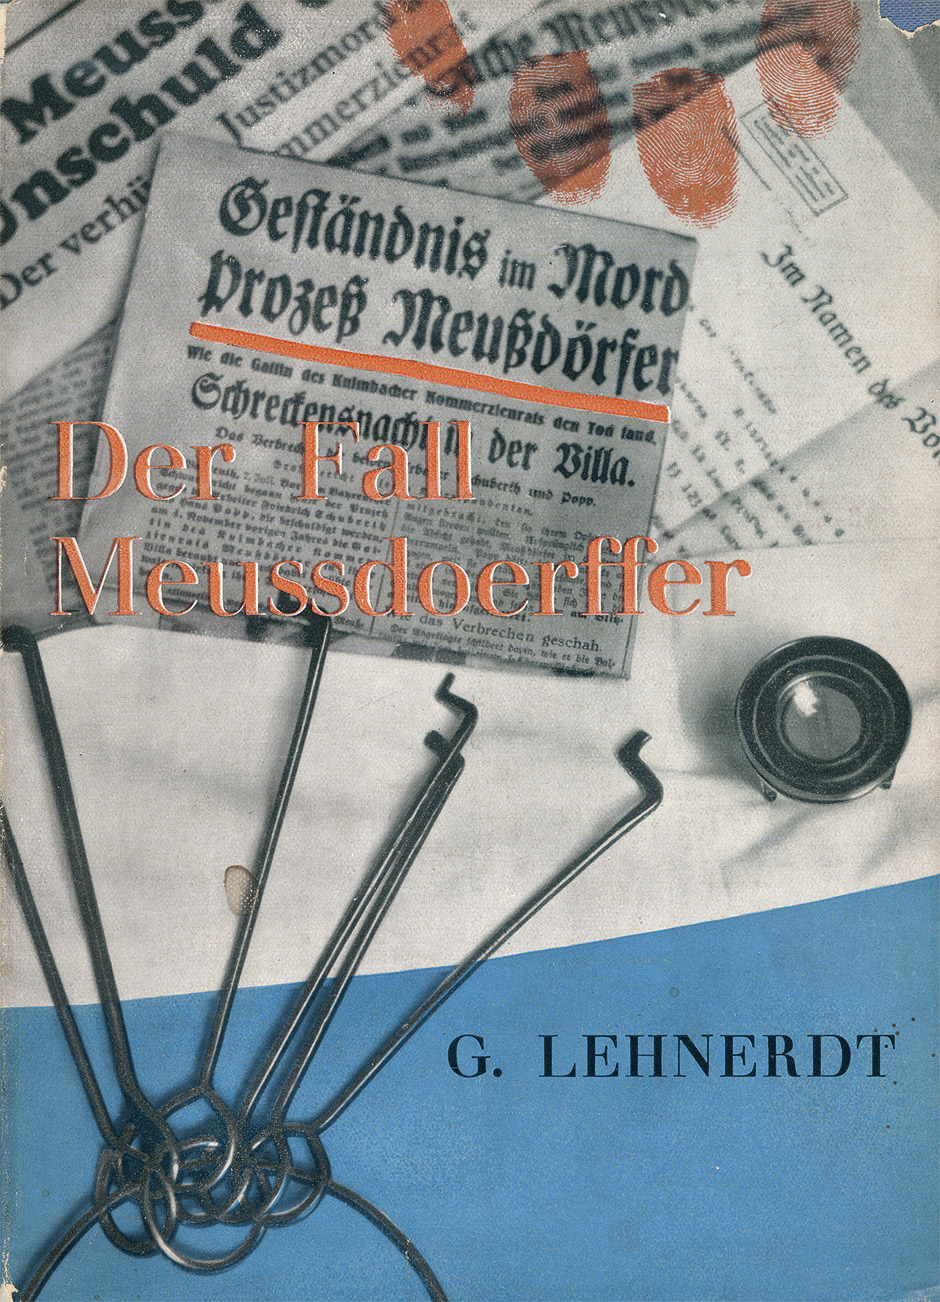 Lot 3278, Auction  115, Lehnerdt, Gotthold, Der Fall Meussdoerffer